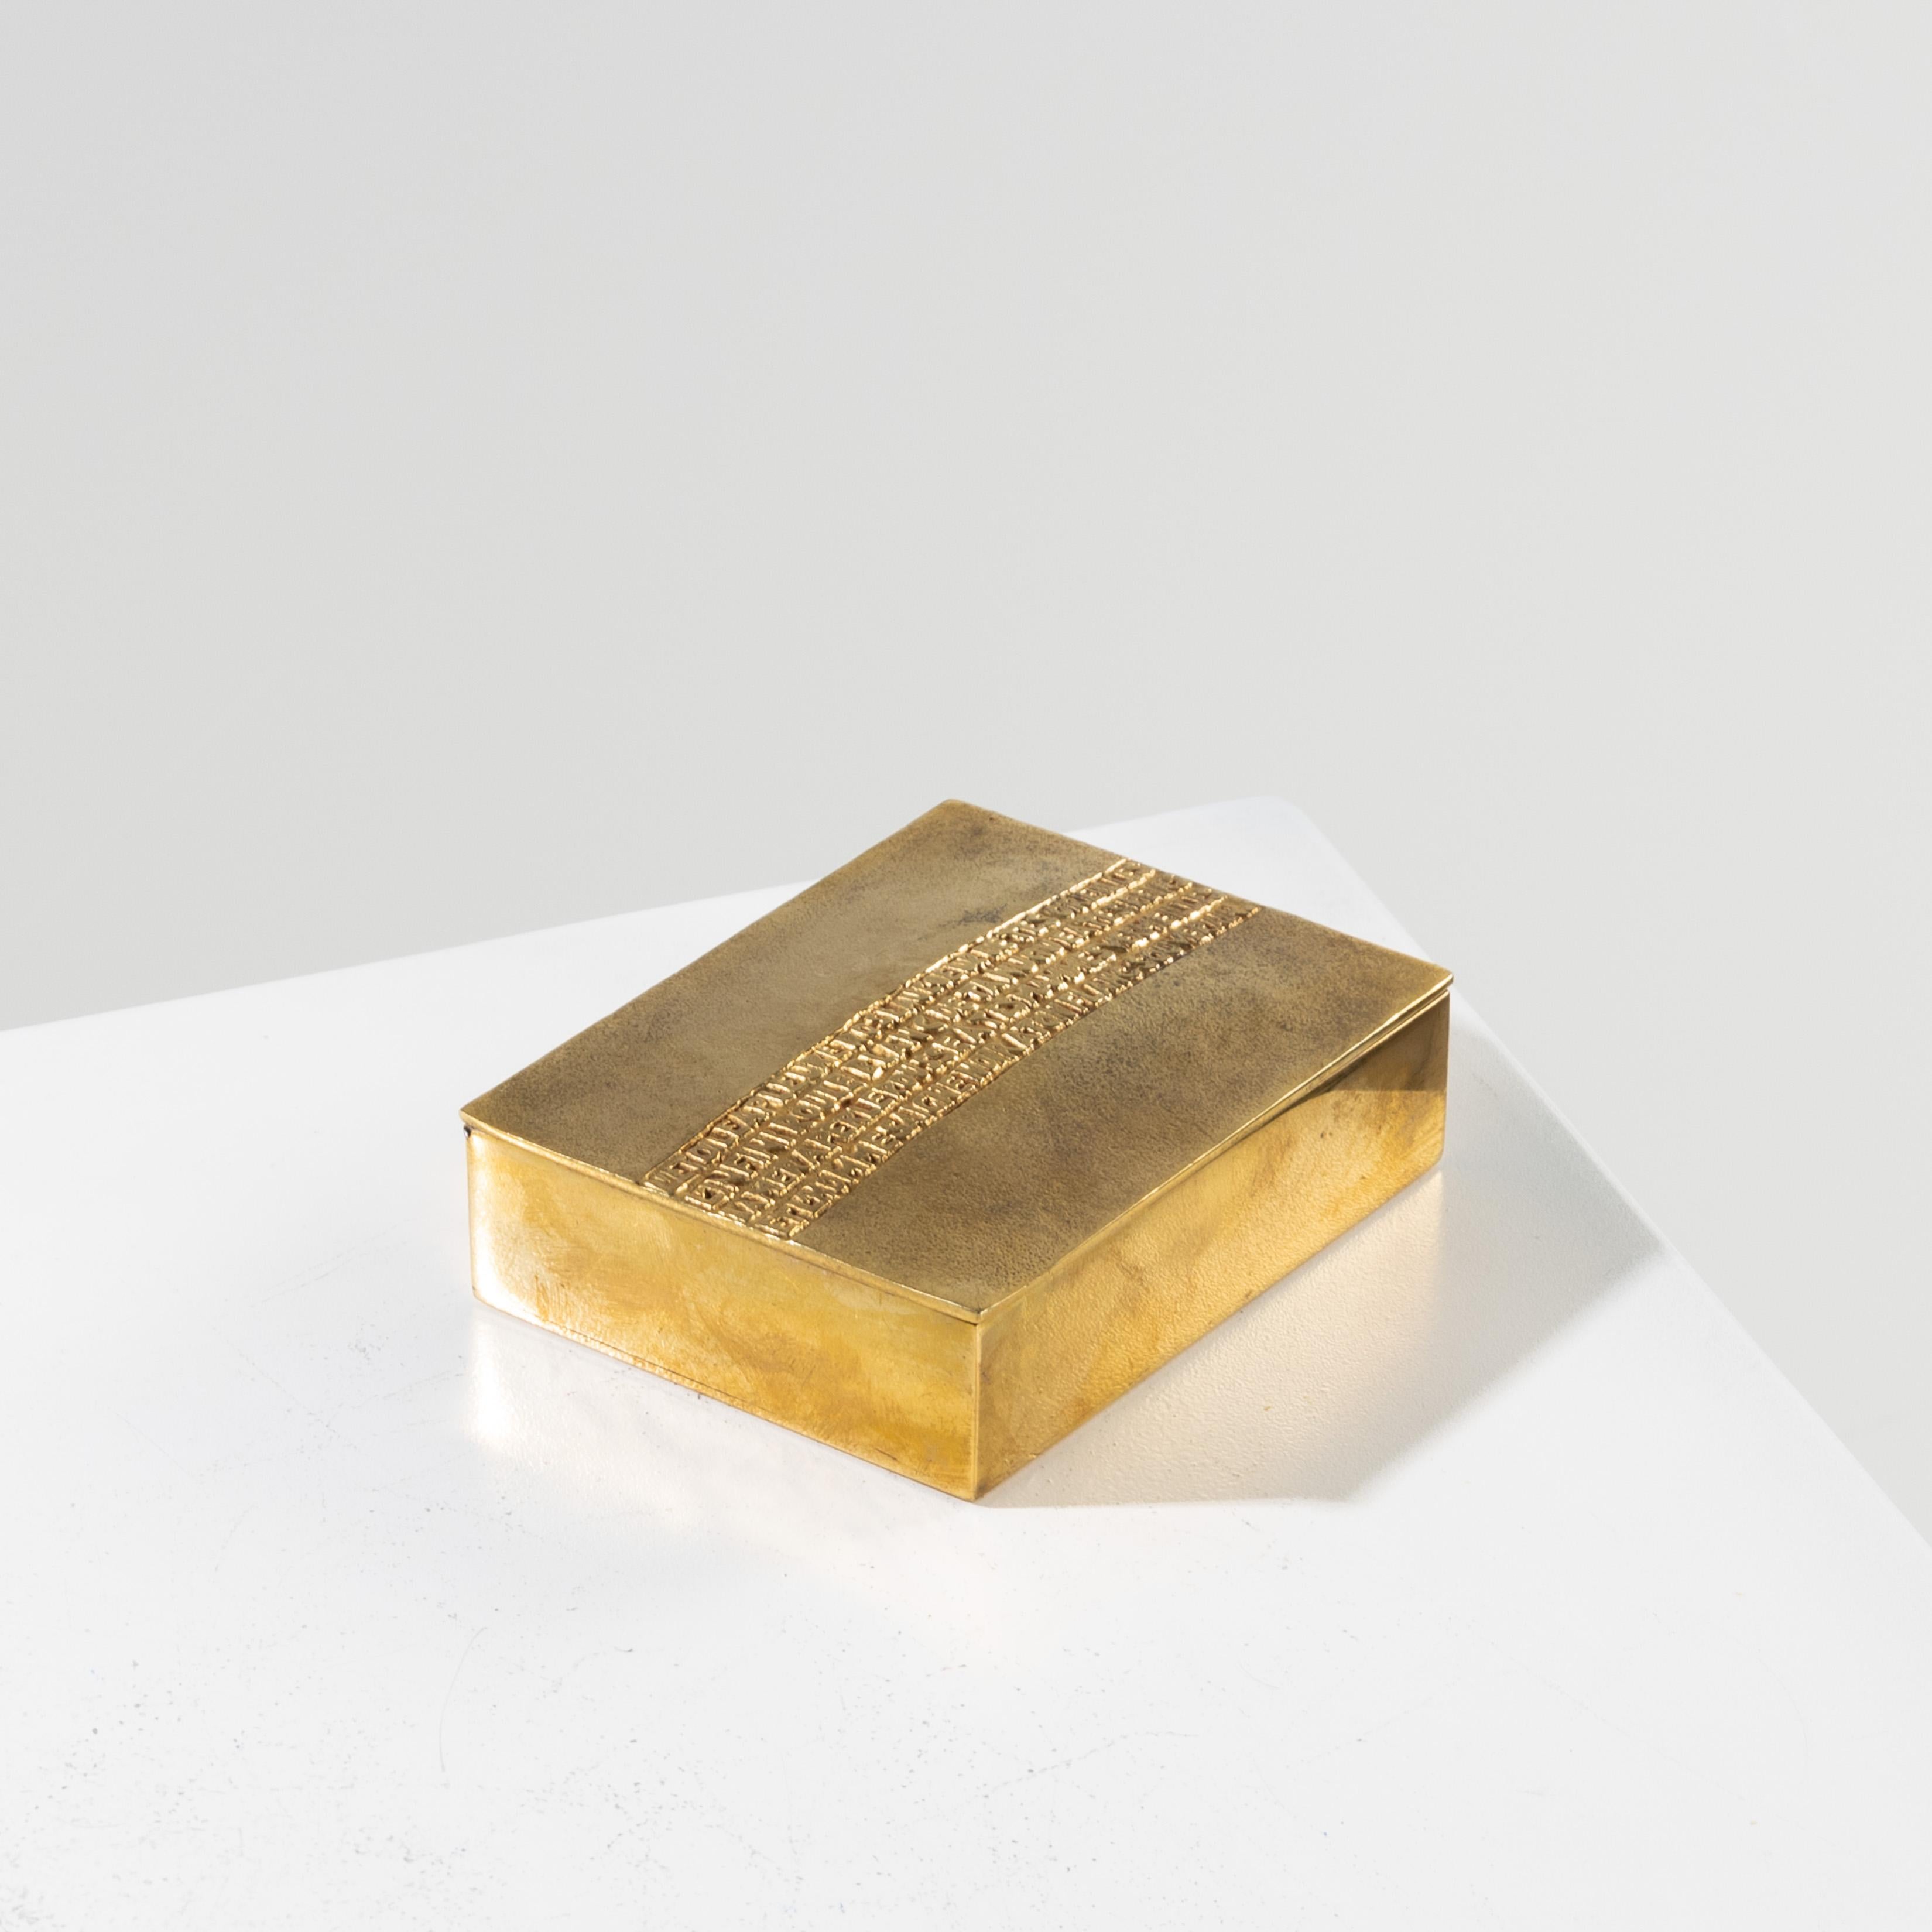 L'étoile a pleuré rose de Line Vautrin - Rara caja de bronce dorado en venta 2